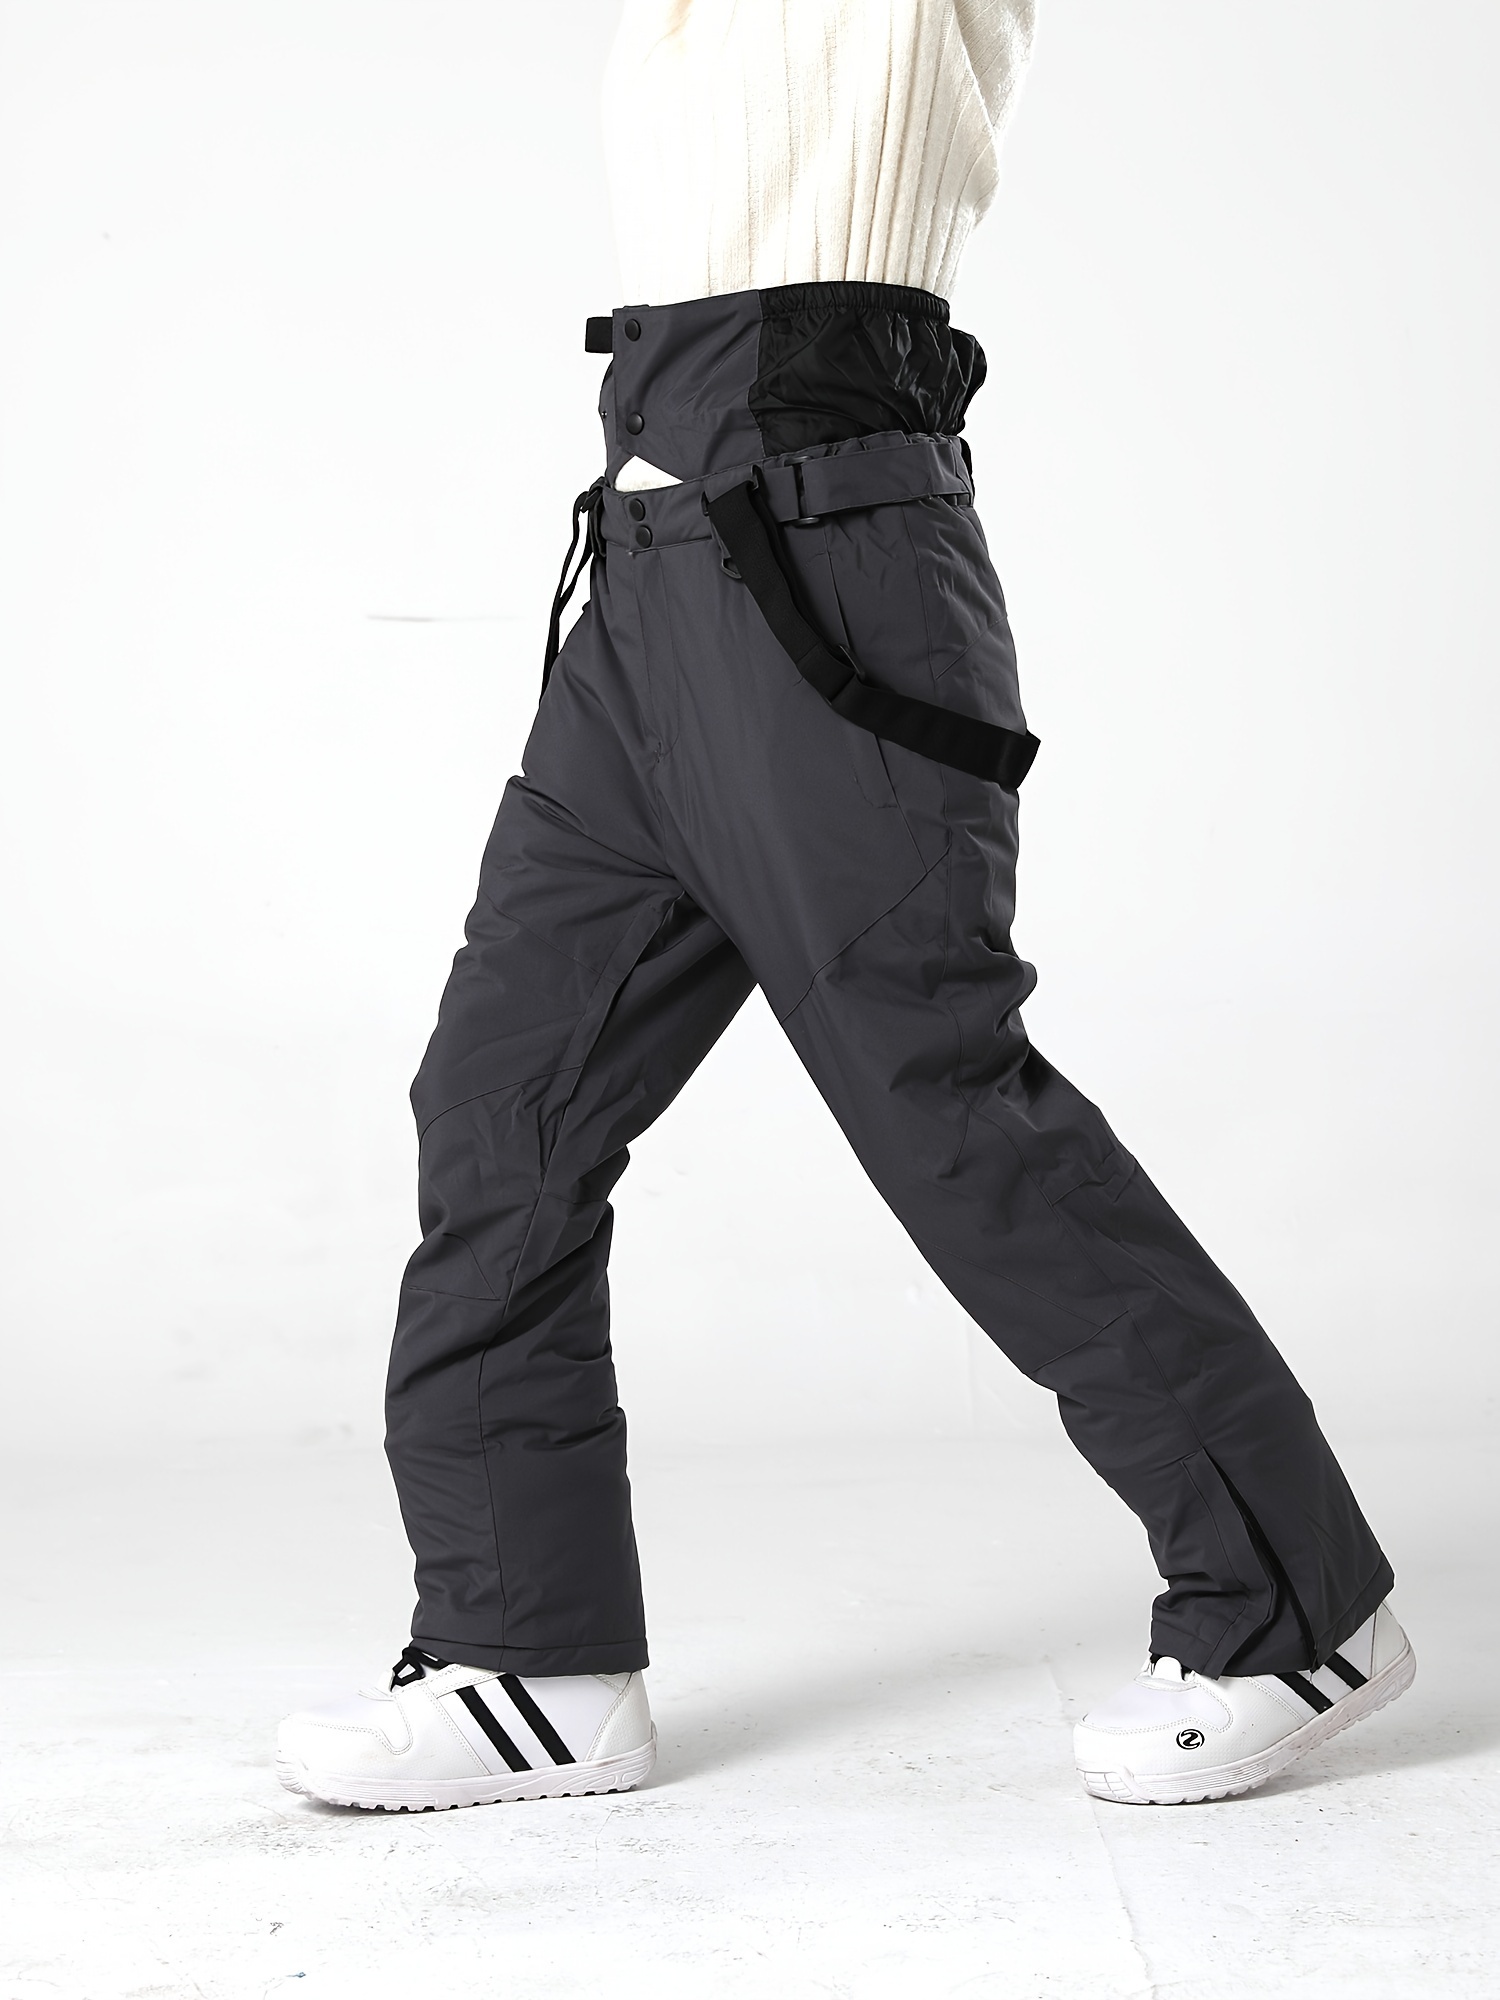 Spyder activewear women’s pants black size medium